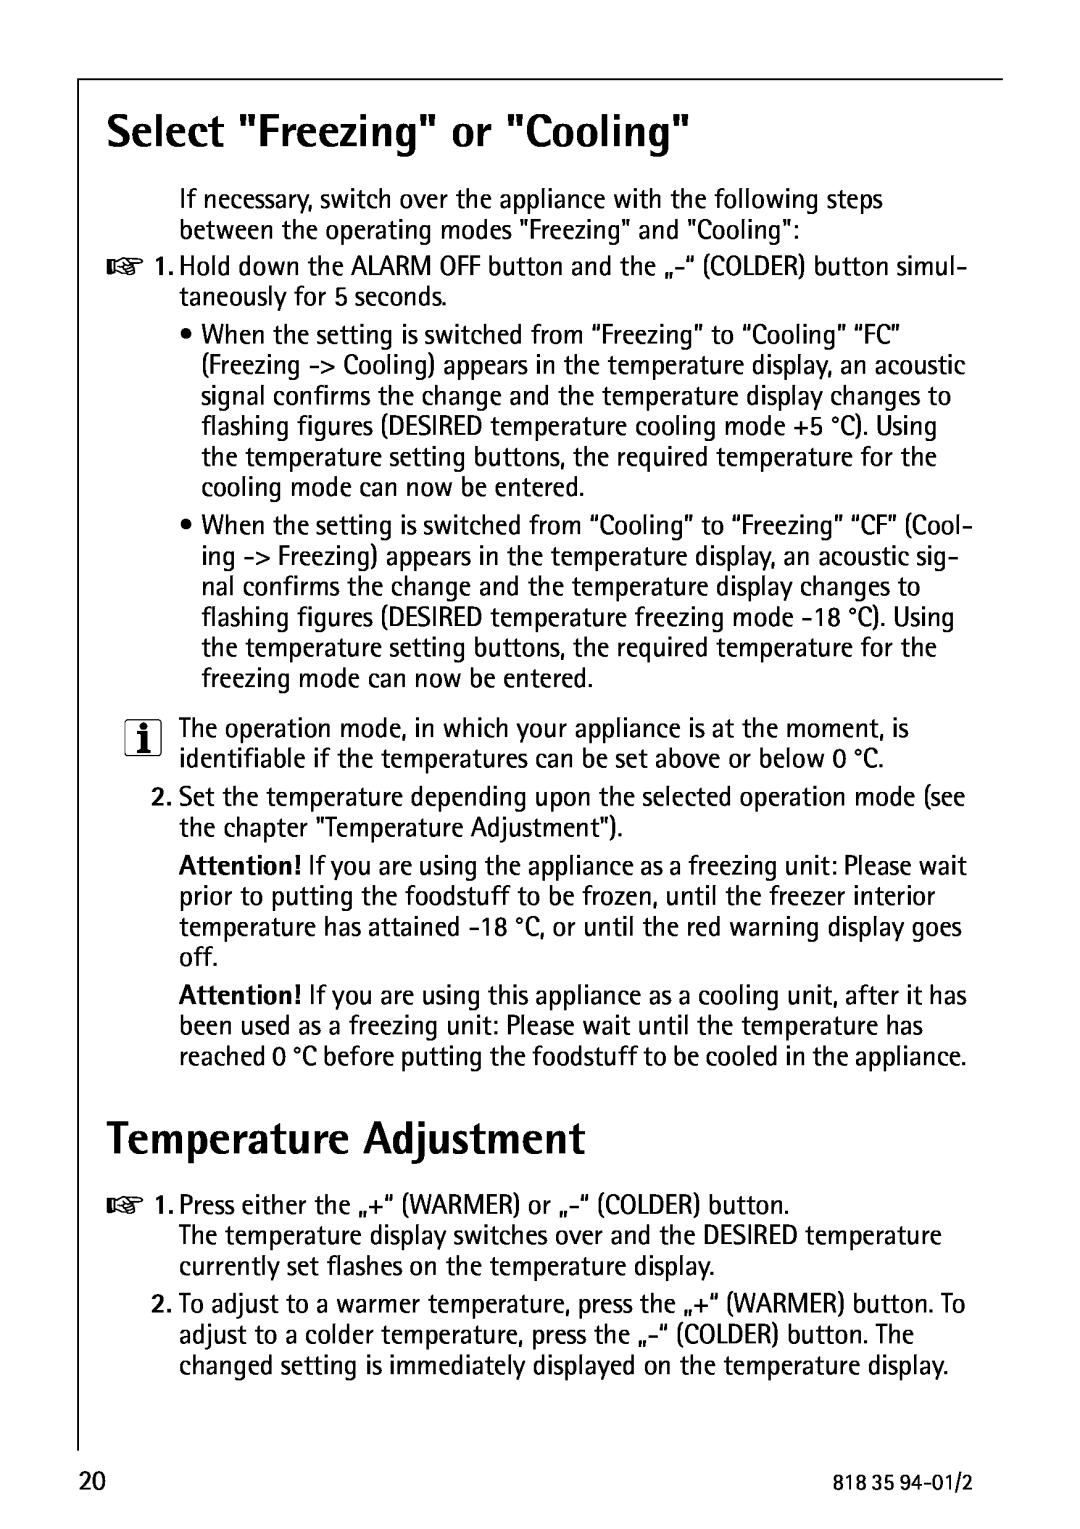 Electrolux U31462 operating instructions Select Freezing or Cooling, Temperature Adjustment 